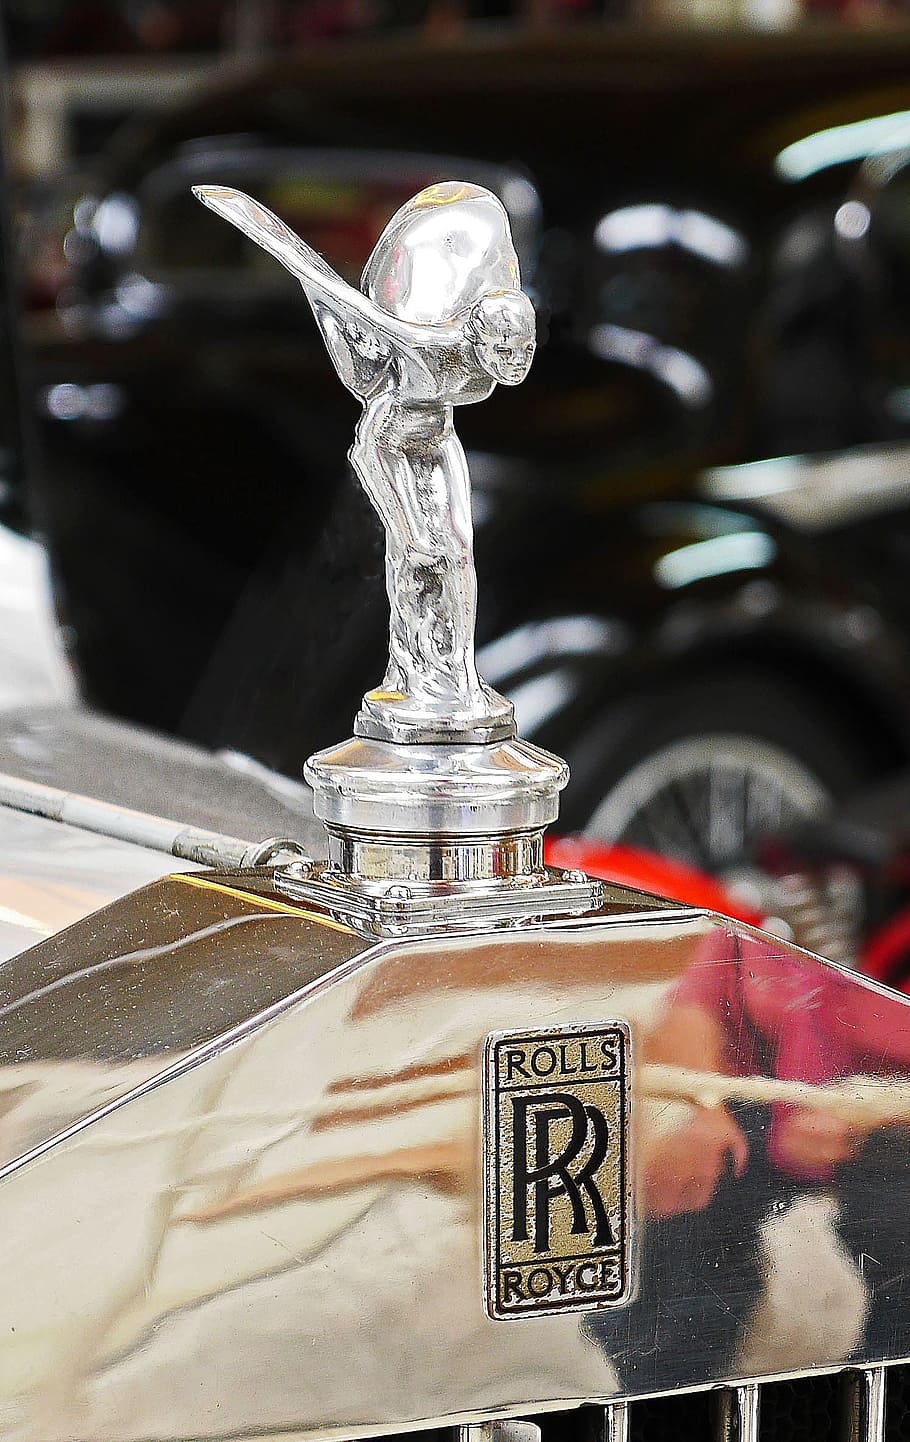 Rolls Royce, Cool, Figure, emily, cool figure, oldtimer, museum, cleaned, blank, exhibit